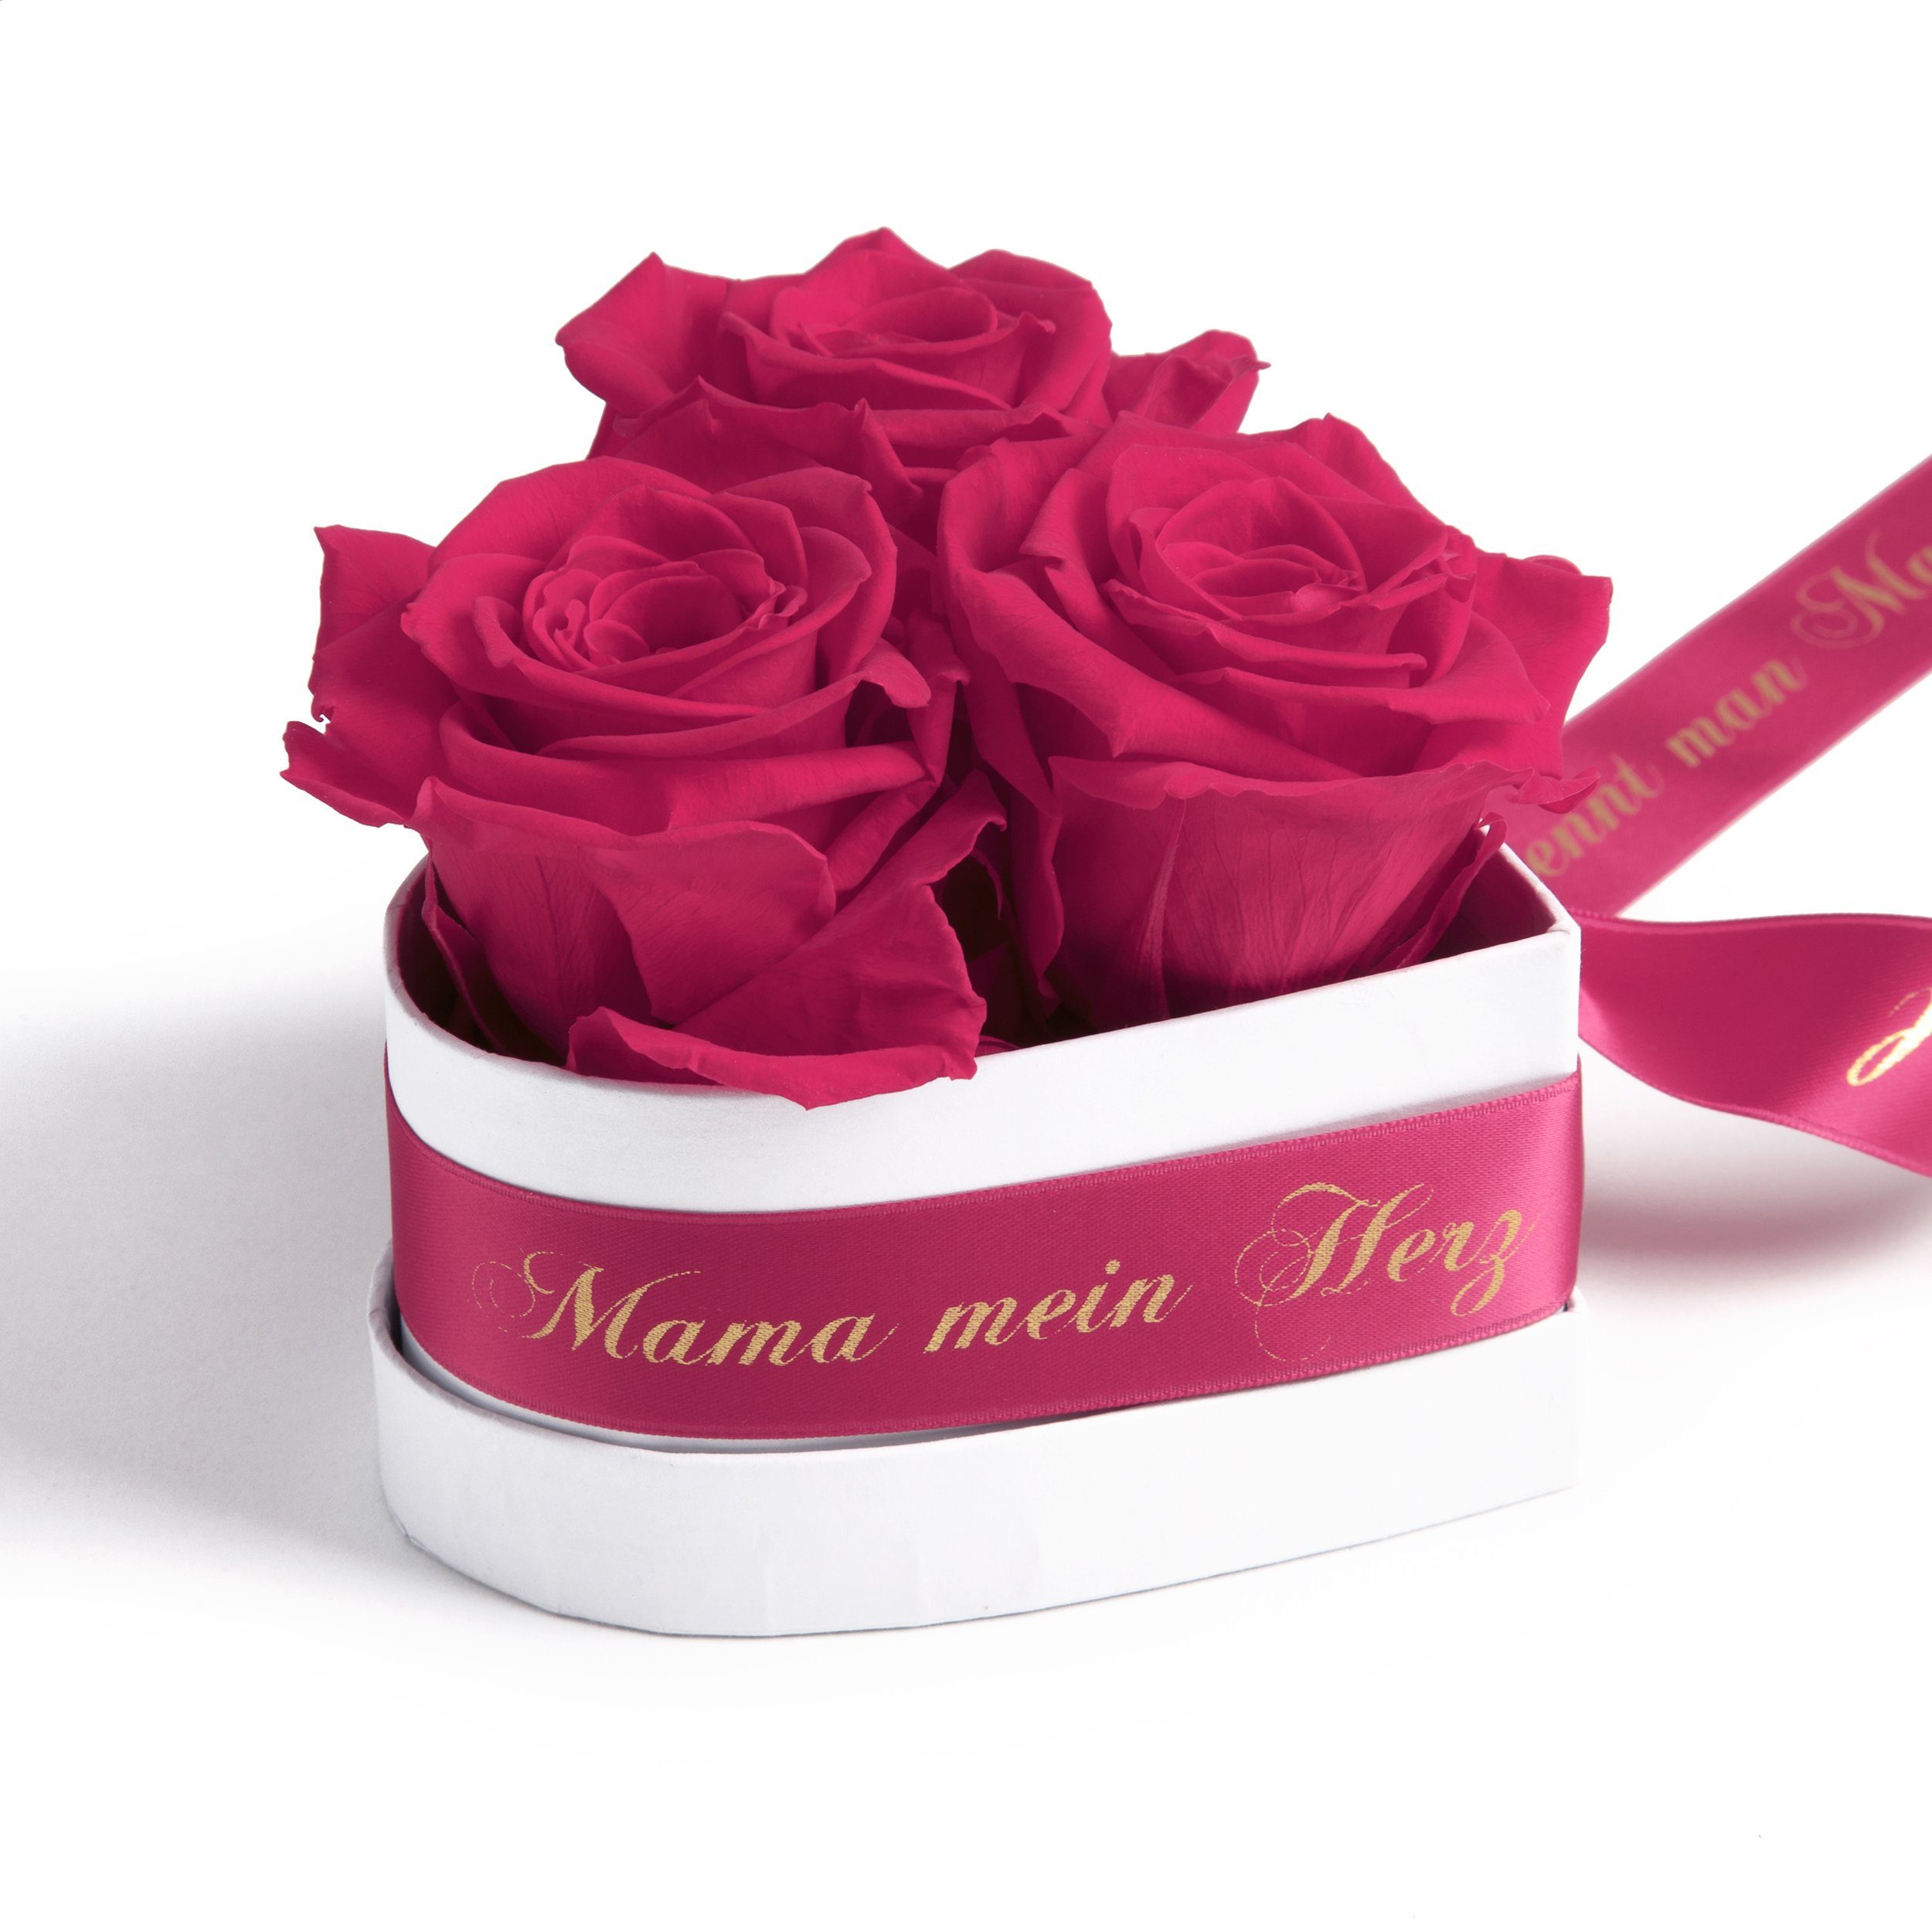 10 3 konserviert Herz Rose, Höhe Rosen haltbar man Mama Rosen ohne Heidelberg, Rosenbox Pink Flügel Kunstblume lange cm, Echte nennt ROSEMARIE SCHULZ Engel